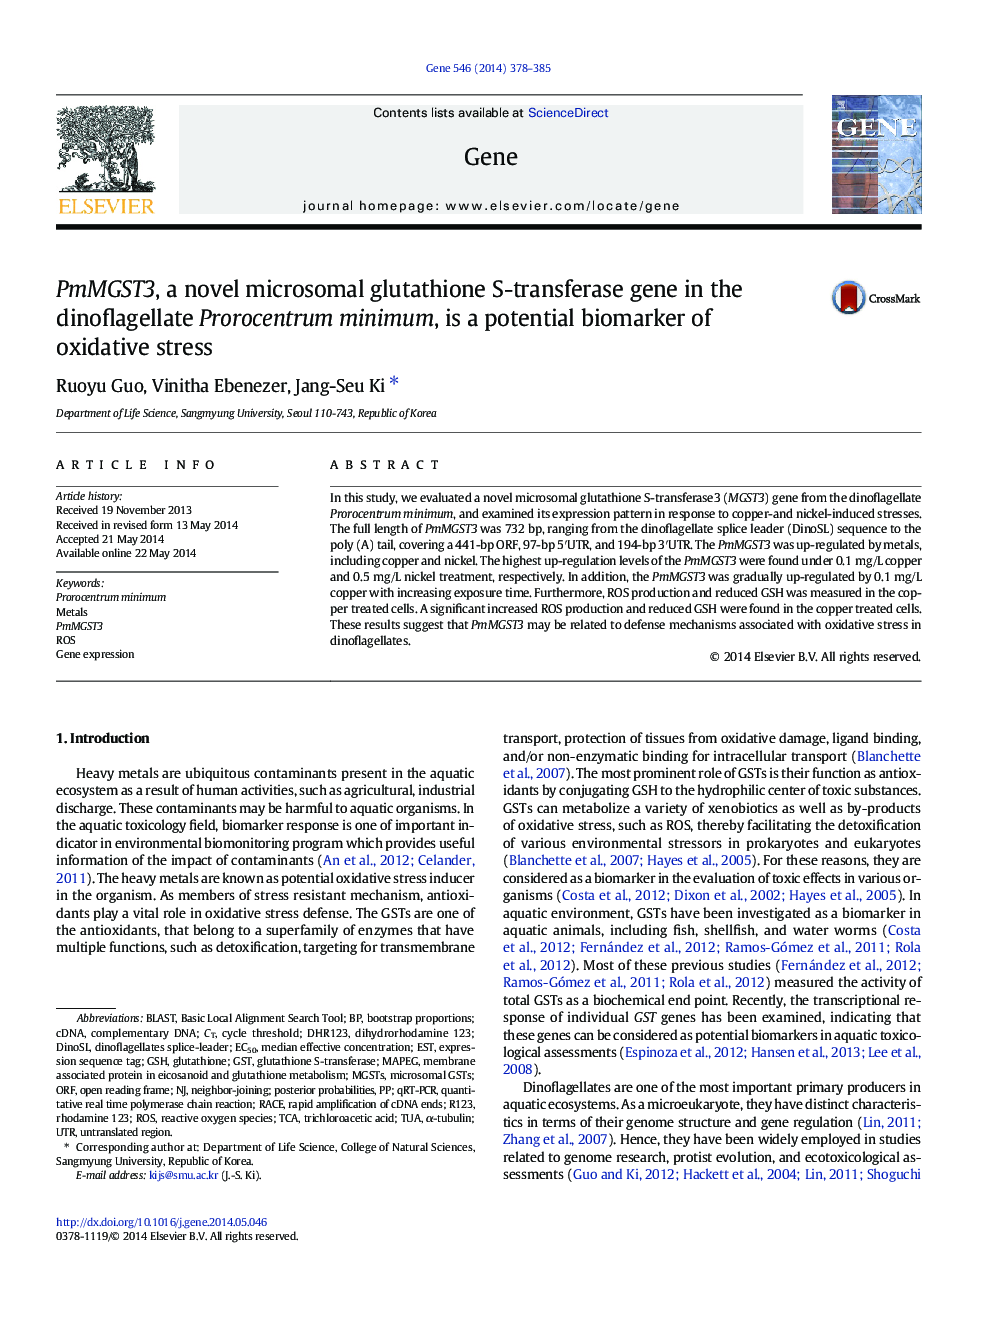 PmMGST3, a novel microsomal glutathione S-transferase gene in the dinoflagellate Prorocentrum minimum, is a potential biomarker of oxidative stress